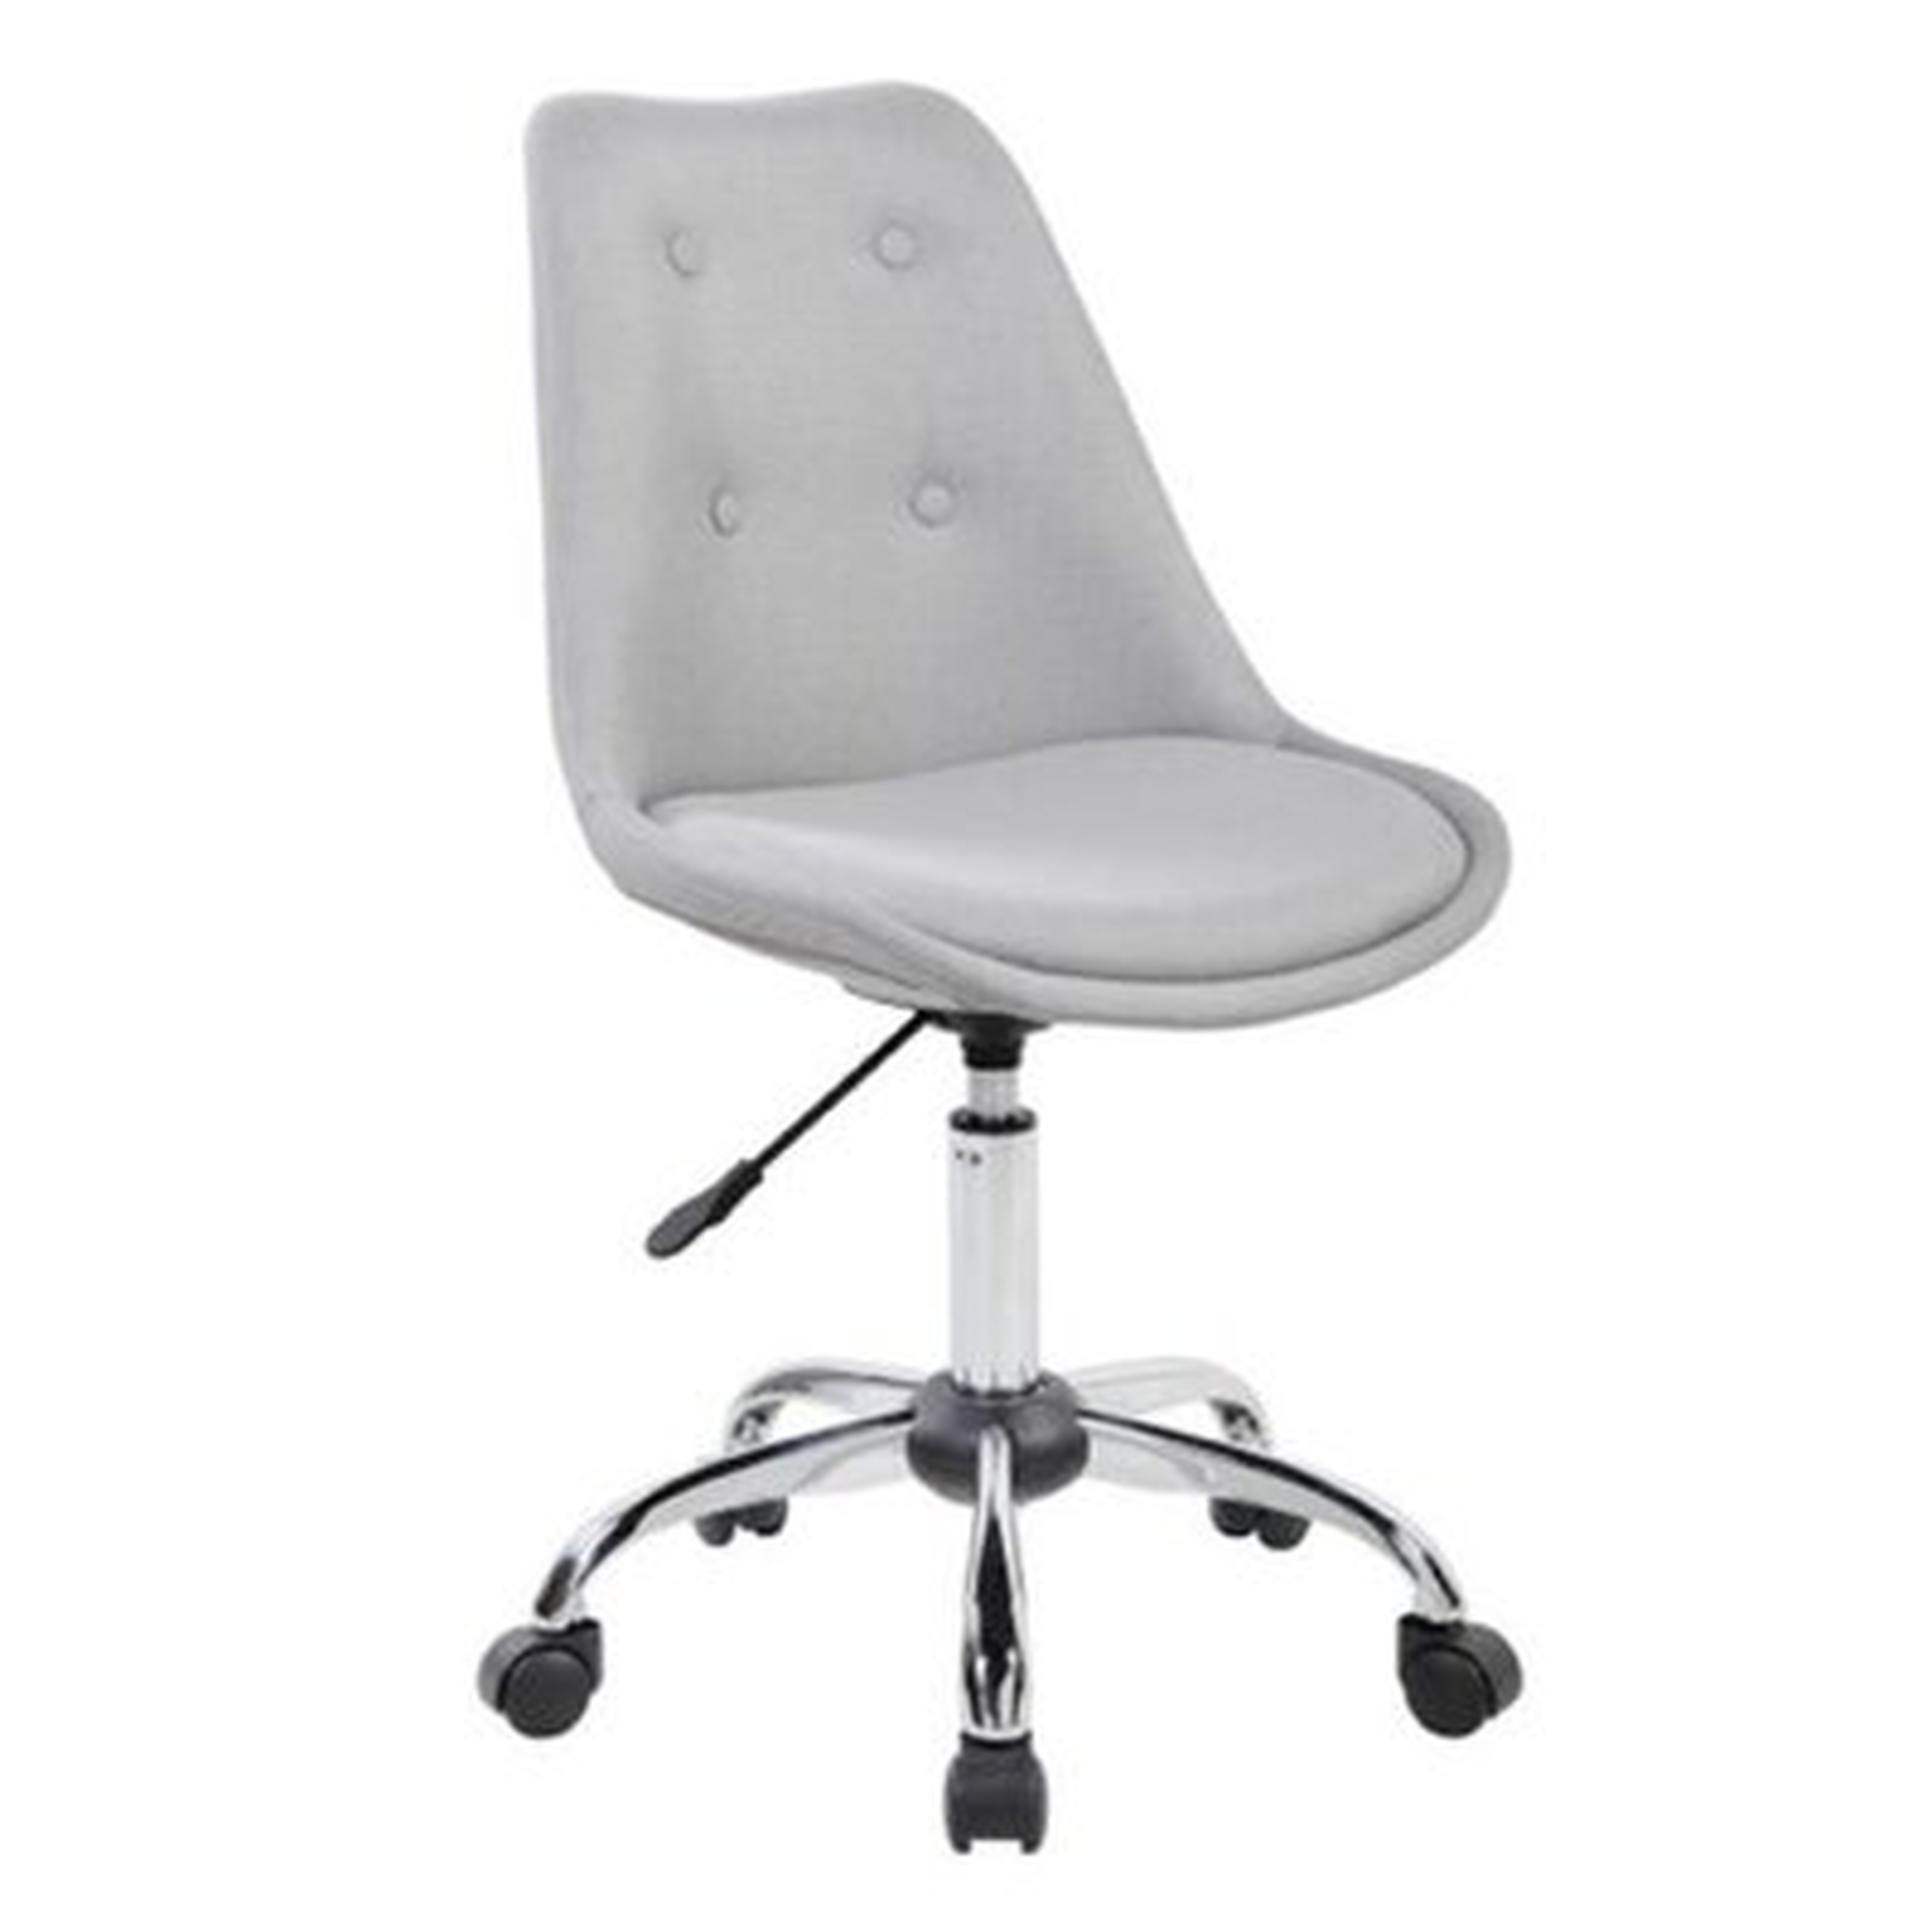 Armless Task Chair With Buttons, Chair, Office Chair, Computer Chair, Writing Chair, Modern Style,grey - Wayfair